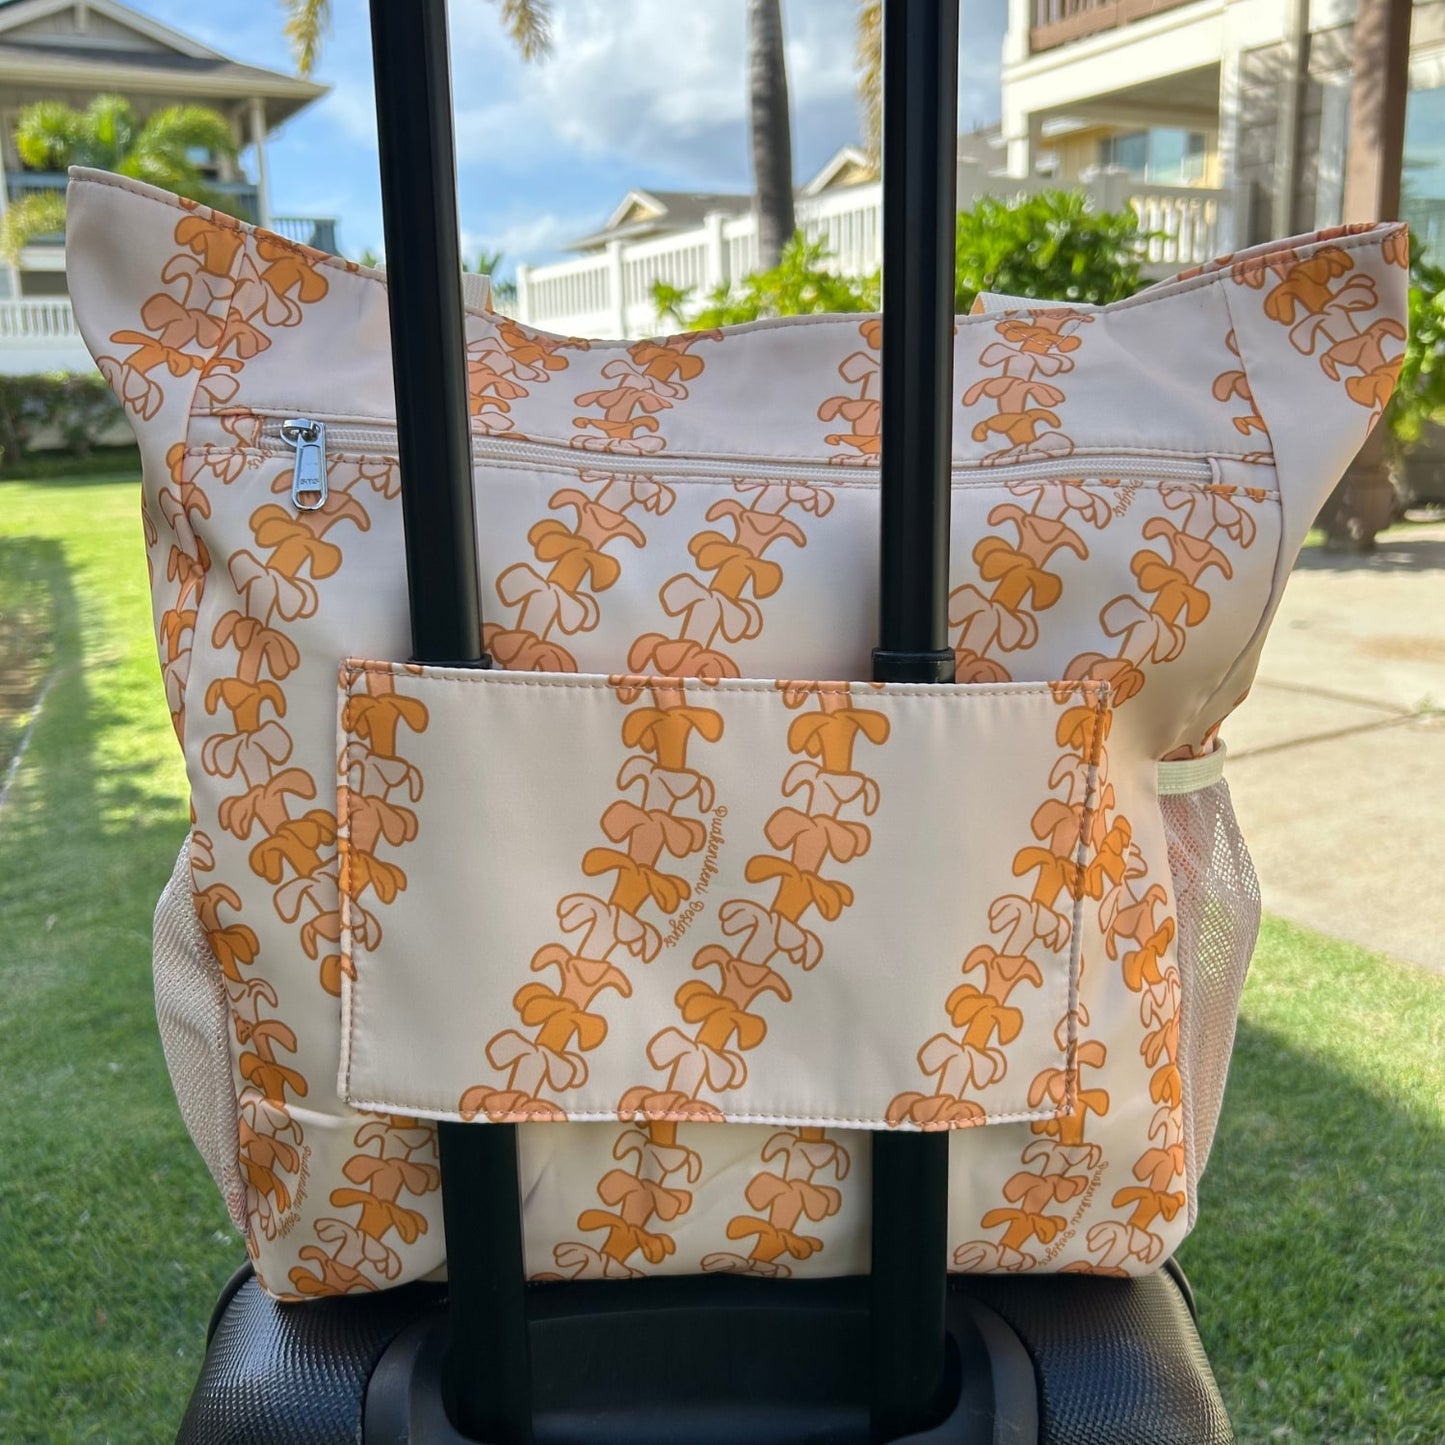 Most popular Holoholo bag in Kaulua light by Puakenikeni Designs - Made for Hawaii Puakenikeni tote bag backside slipped onto rolling luggage carry-on